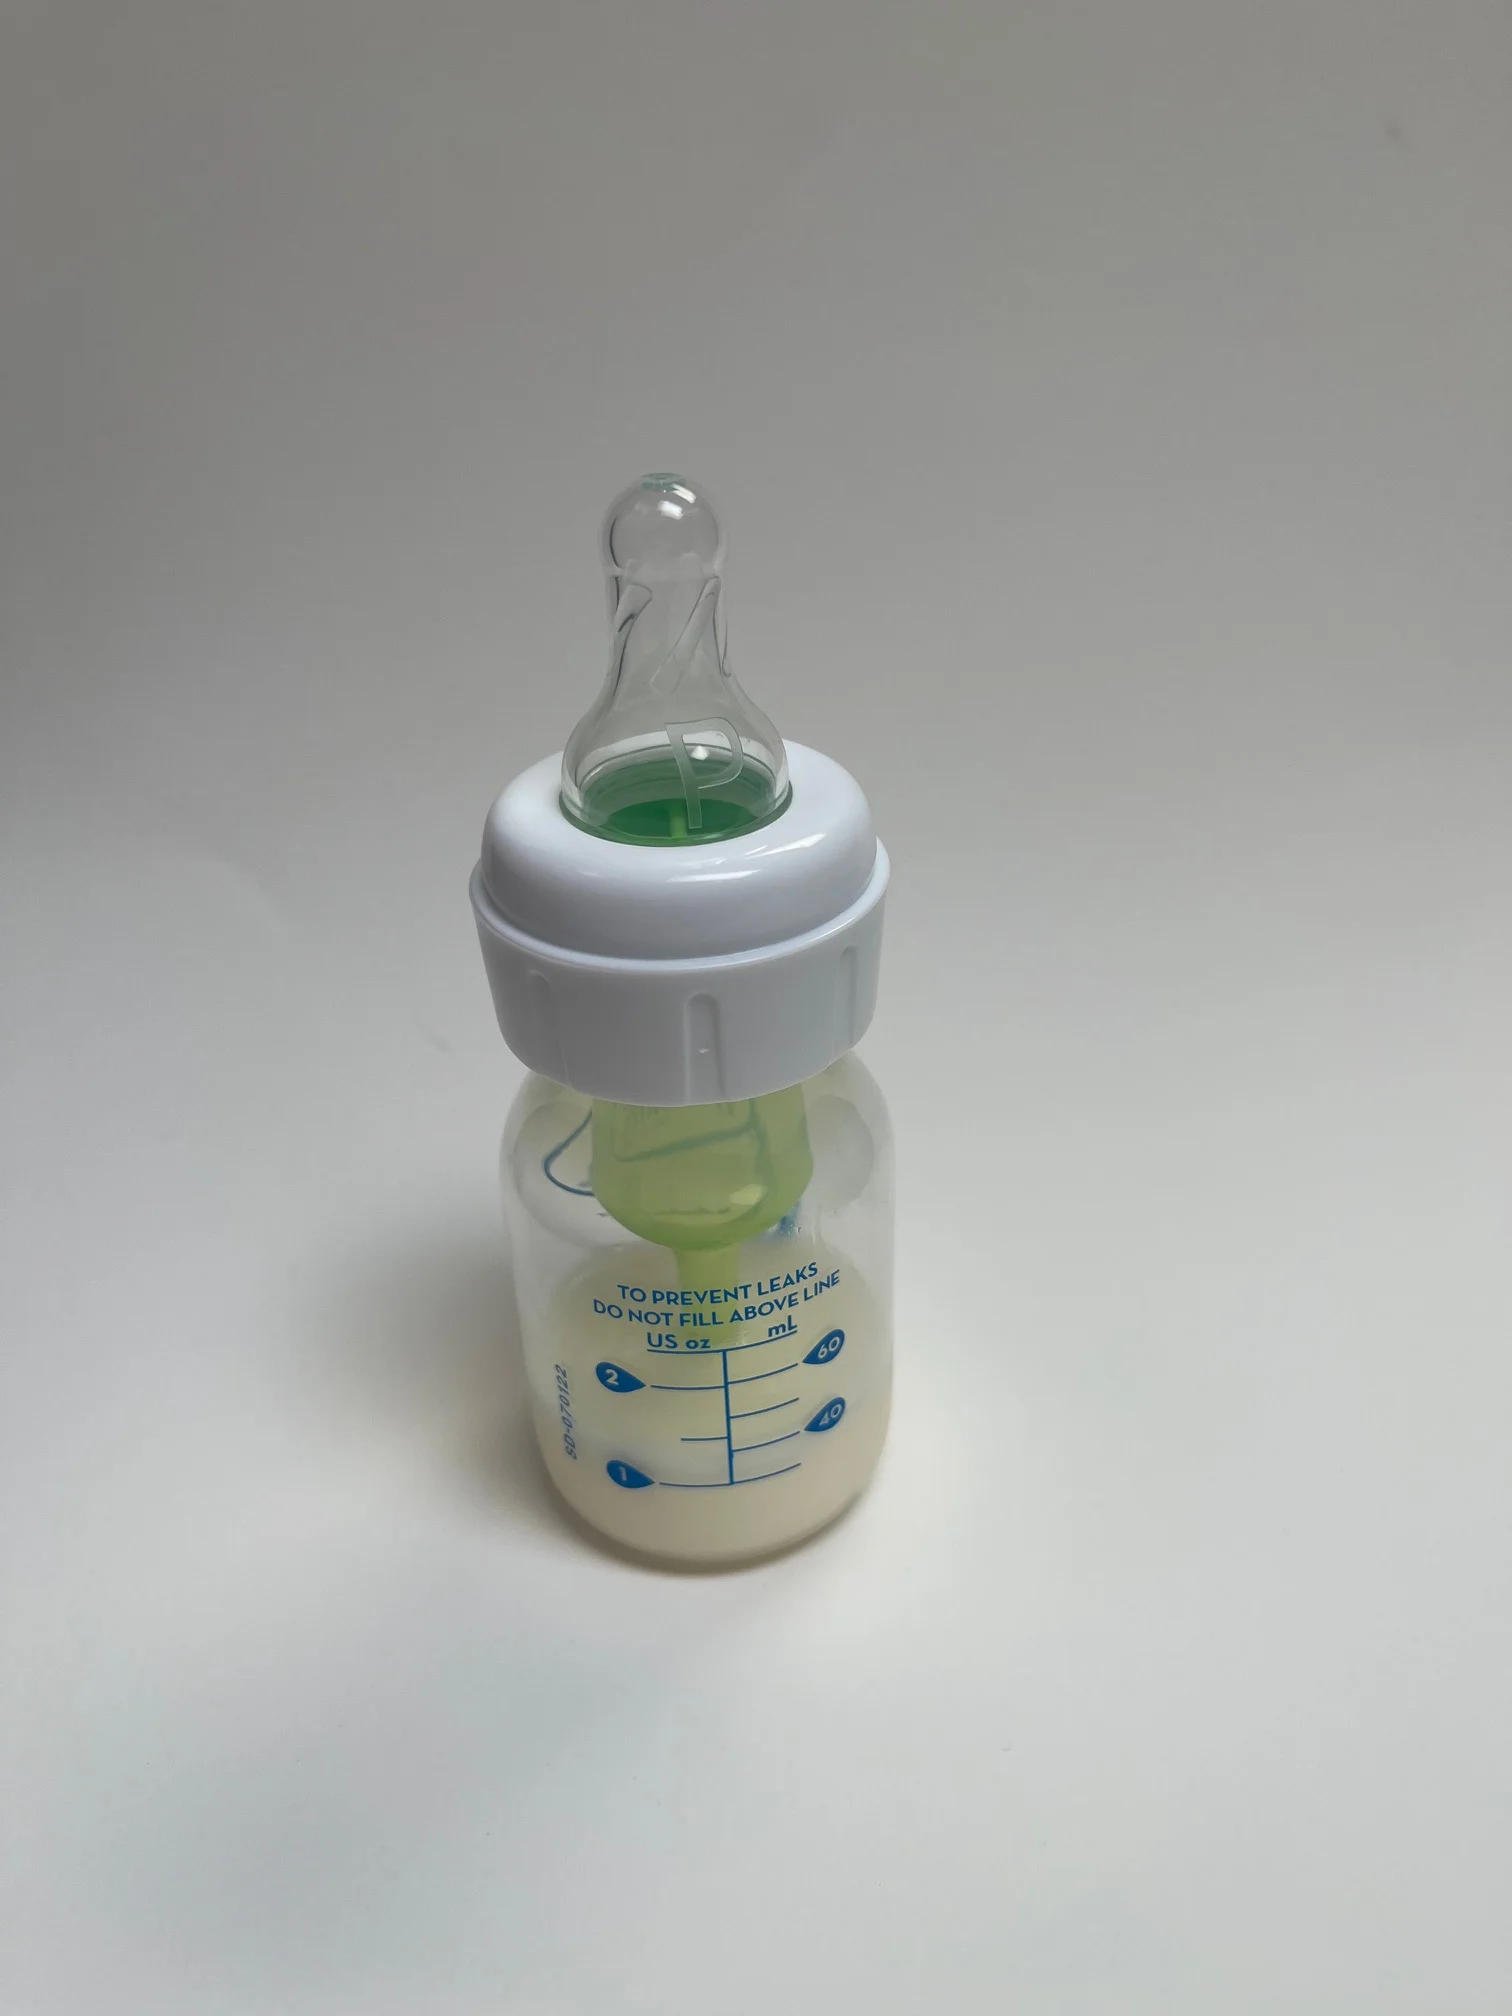 The 5 Best Baby Bottles in 2023